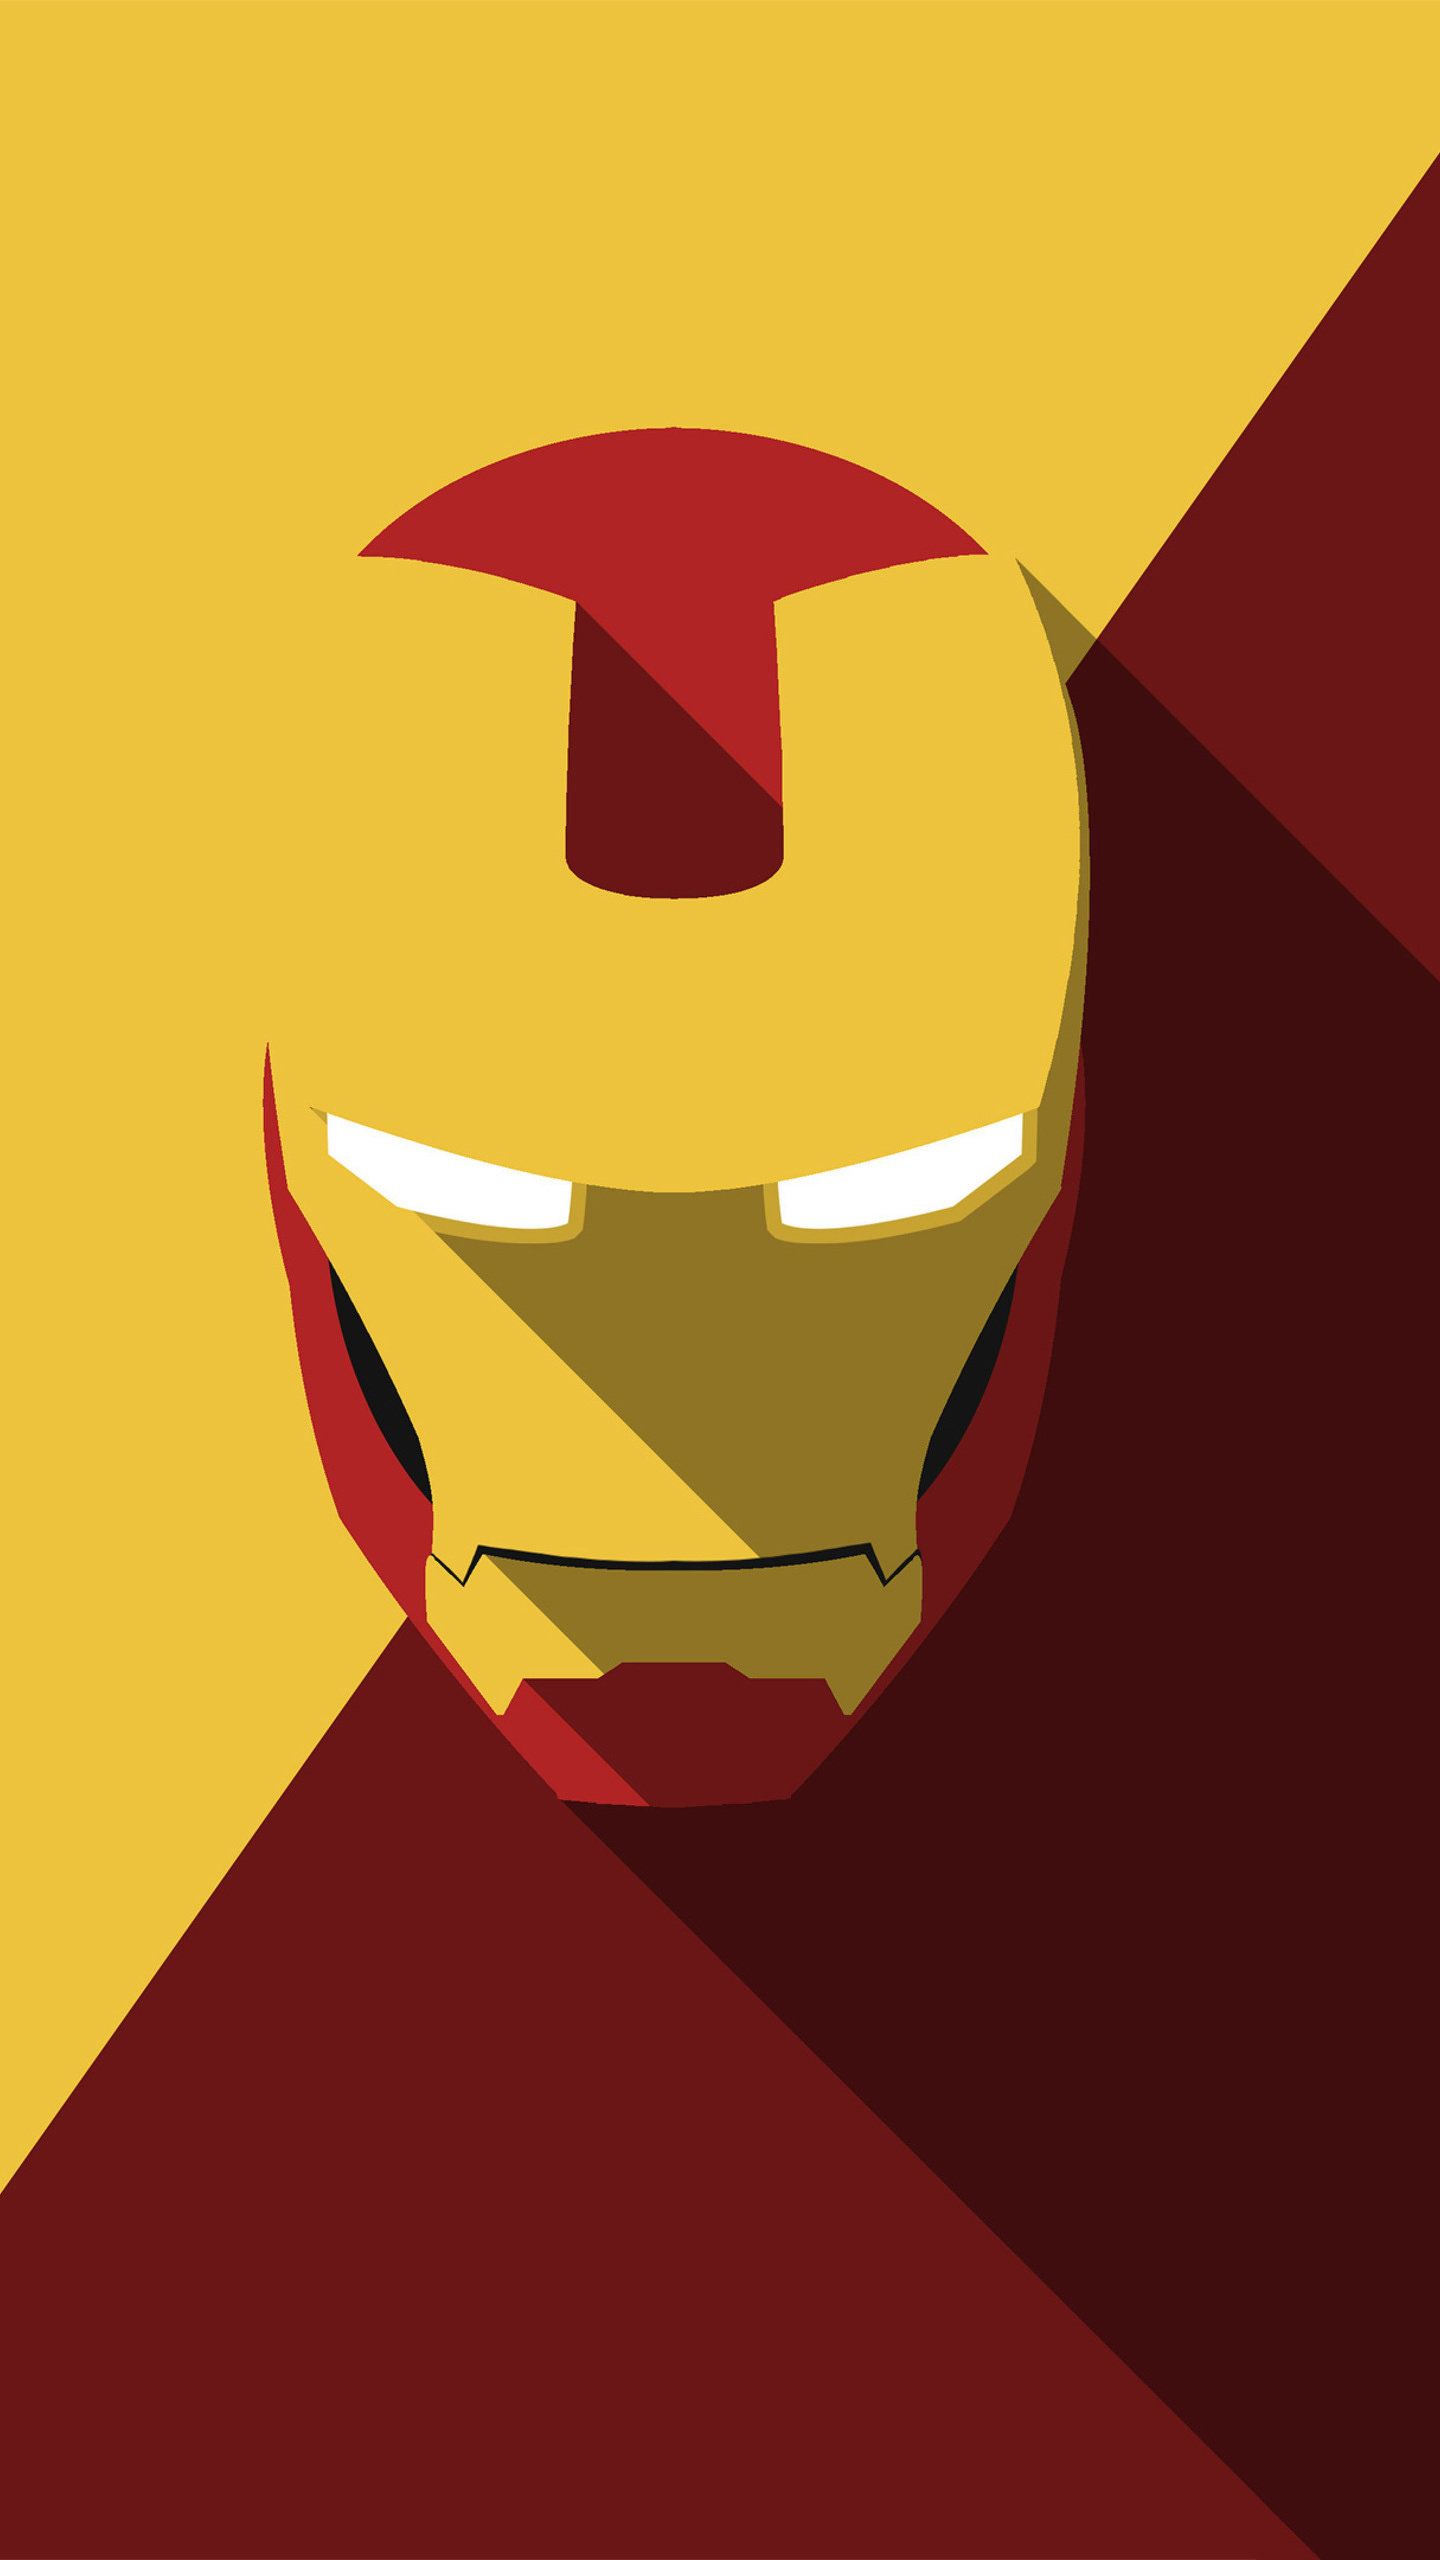 Iron Man Minimalism 4K HD Wallpaper di 2020. Pahlawan marvel